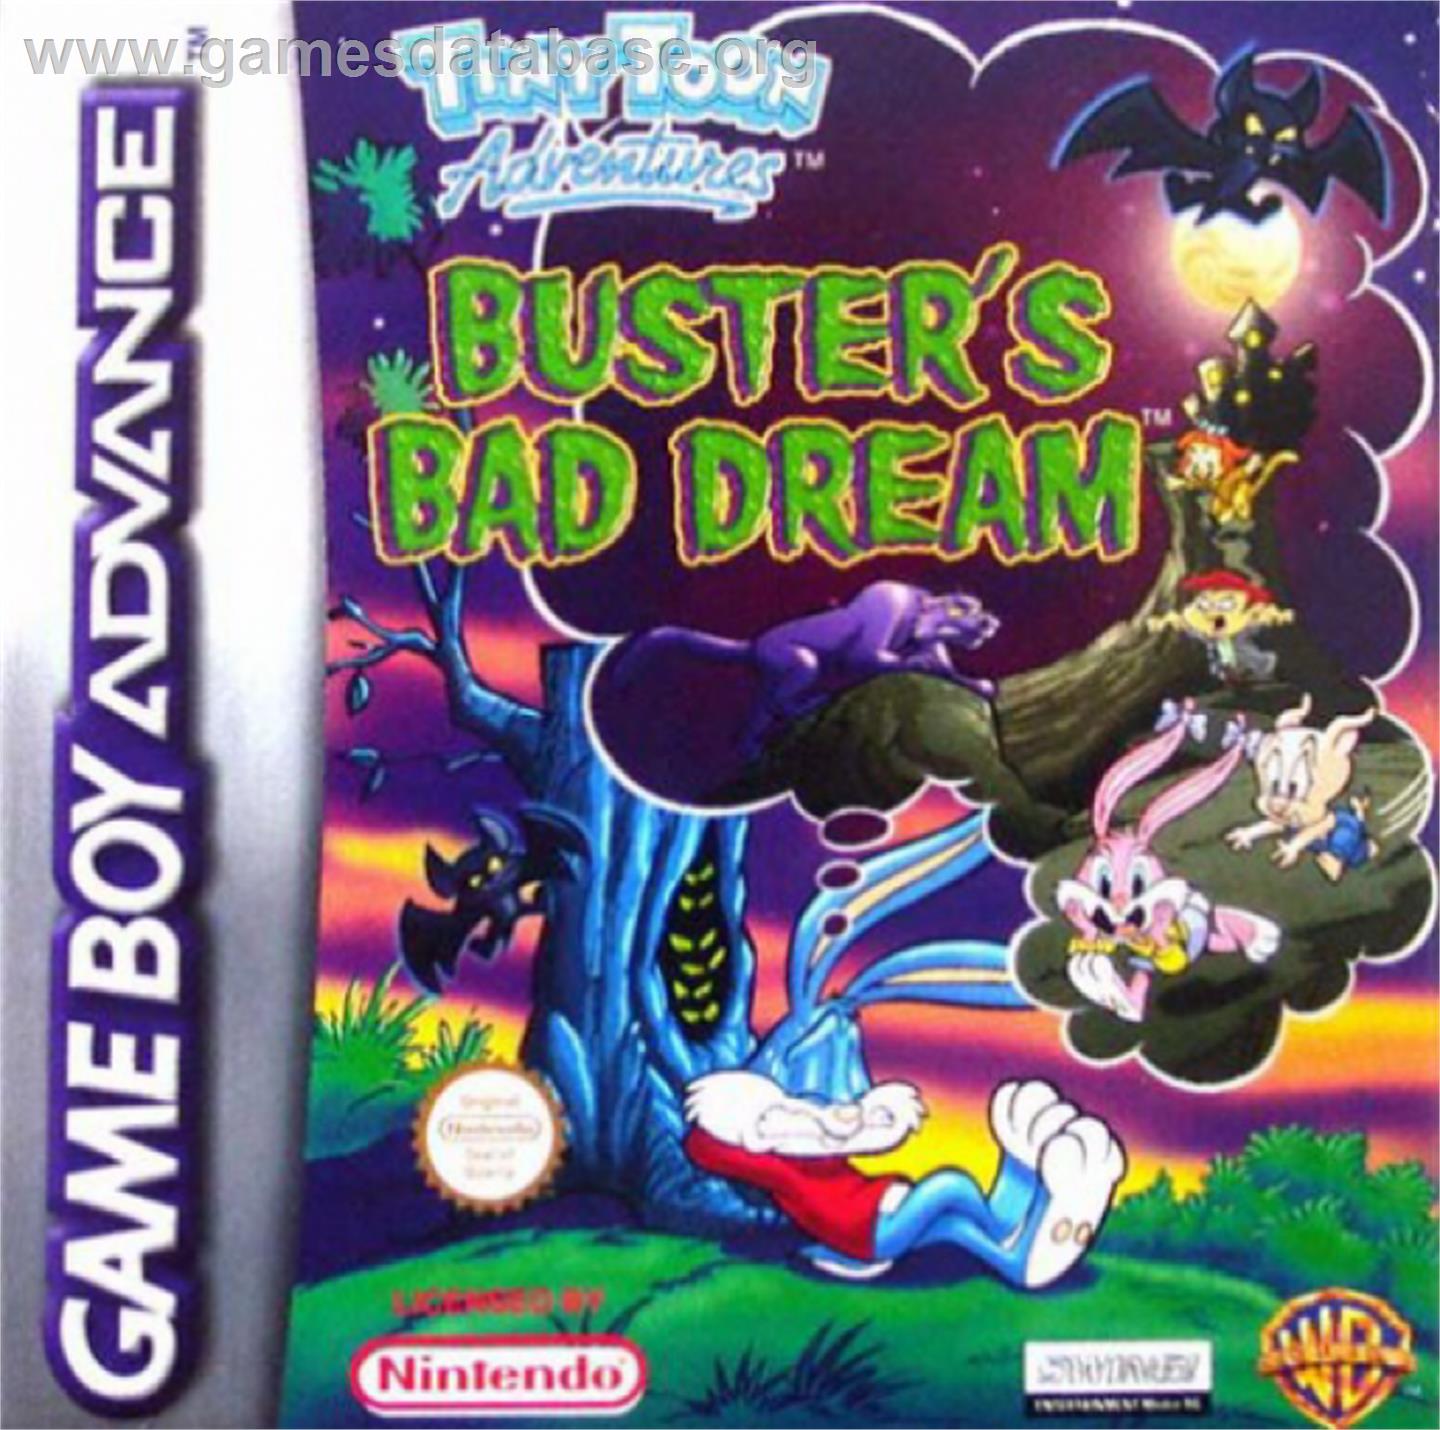 Tiny Toon Adventures: Buster's Bad Dream - Nintendo Game Boy Advance - Artwork - Box